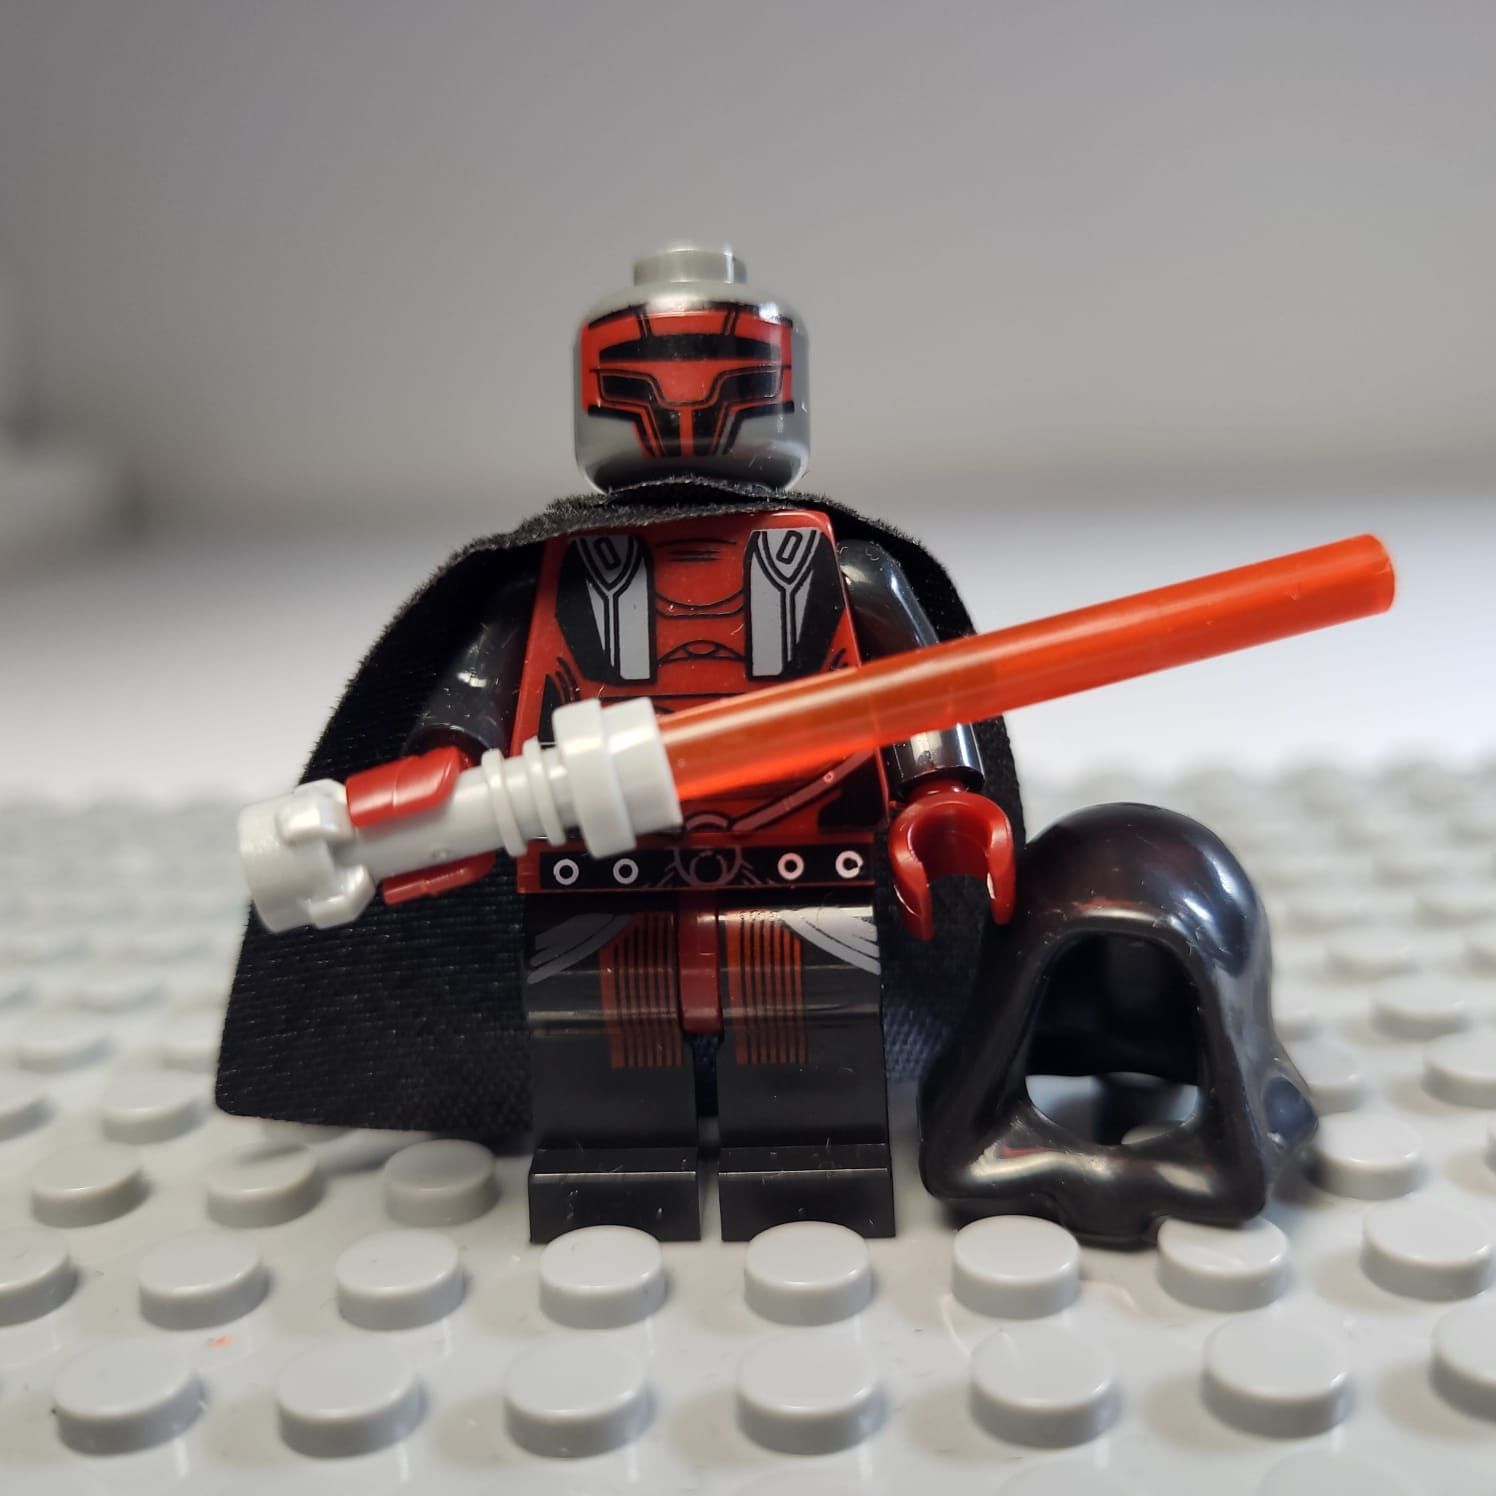 Darth Revan | Star Wars | Gratis Naklejka Lego